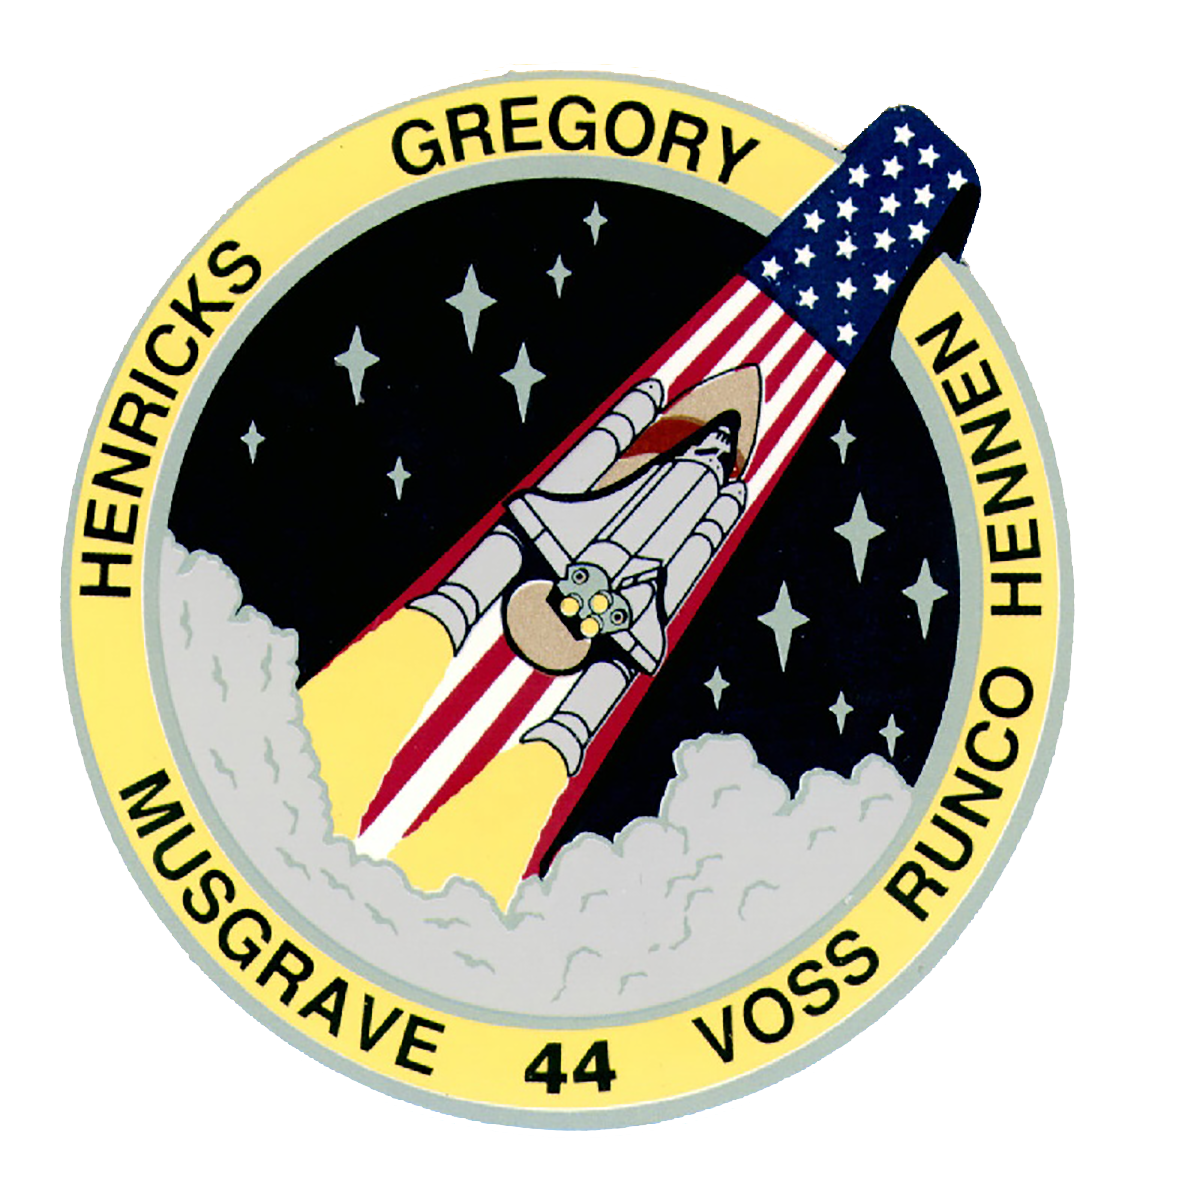 STS-44 (Atlantis)